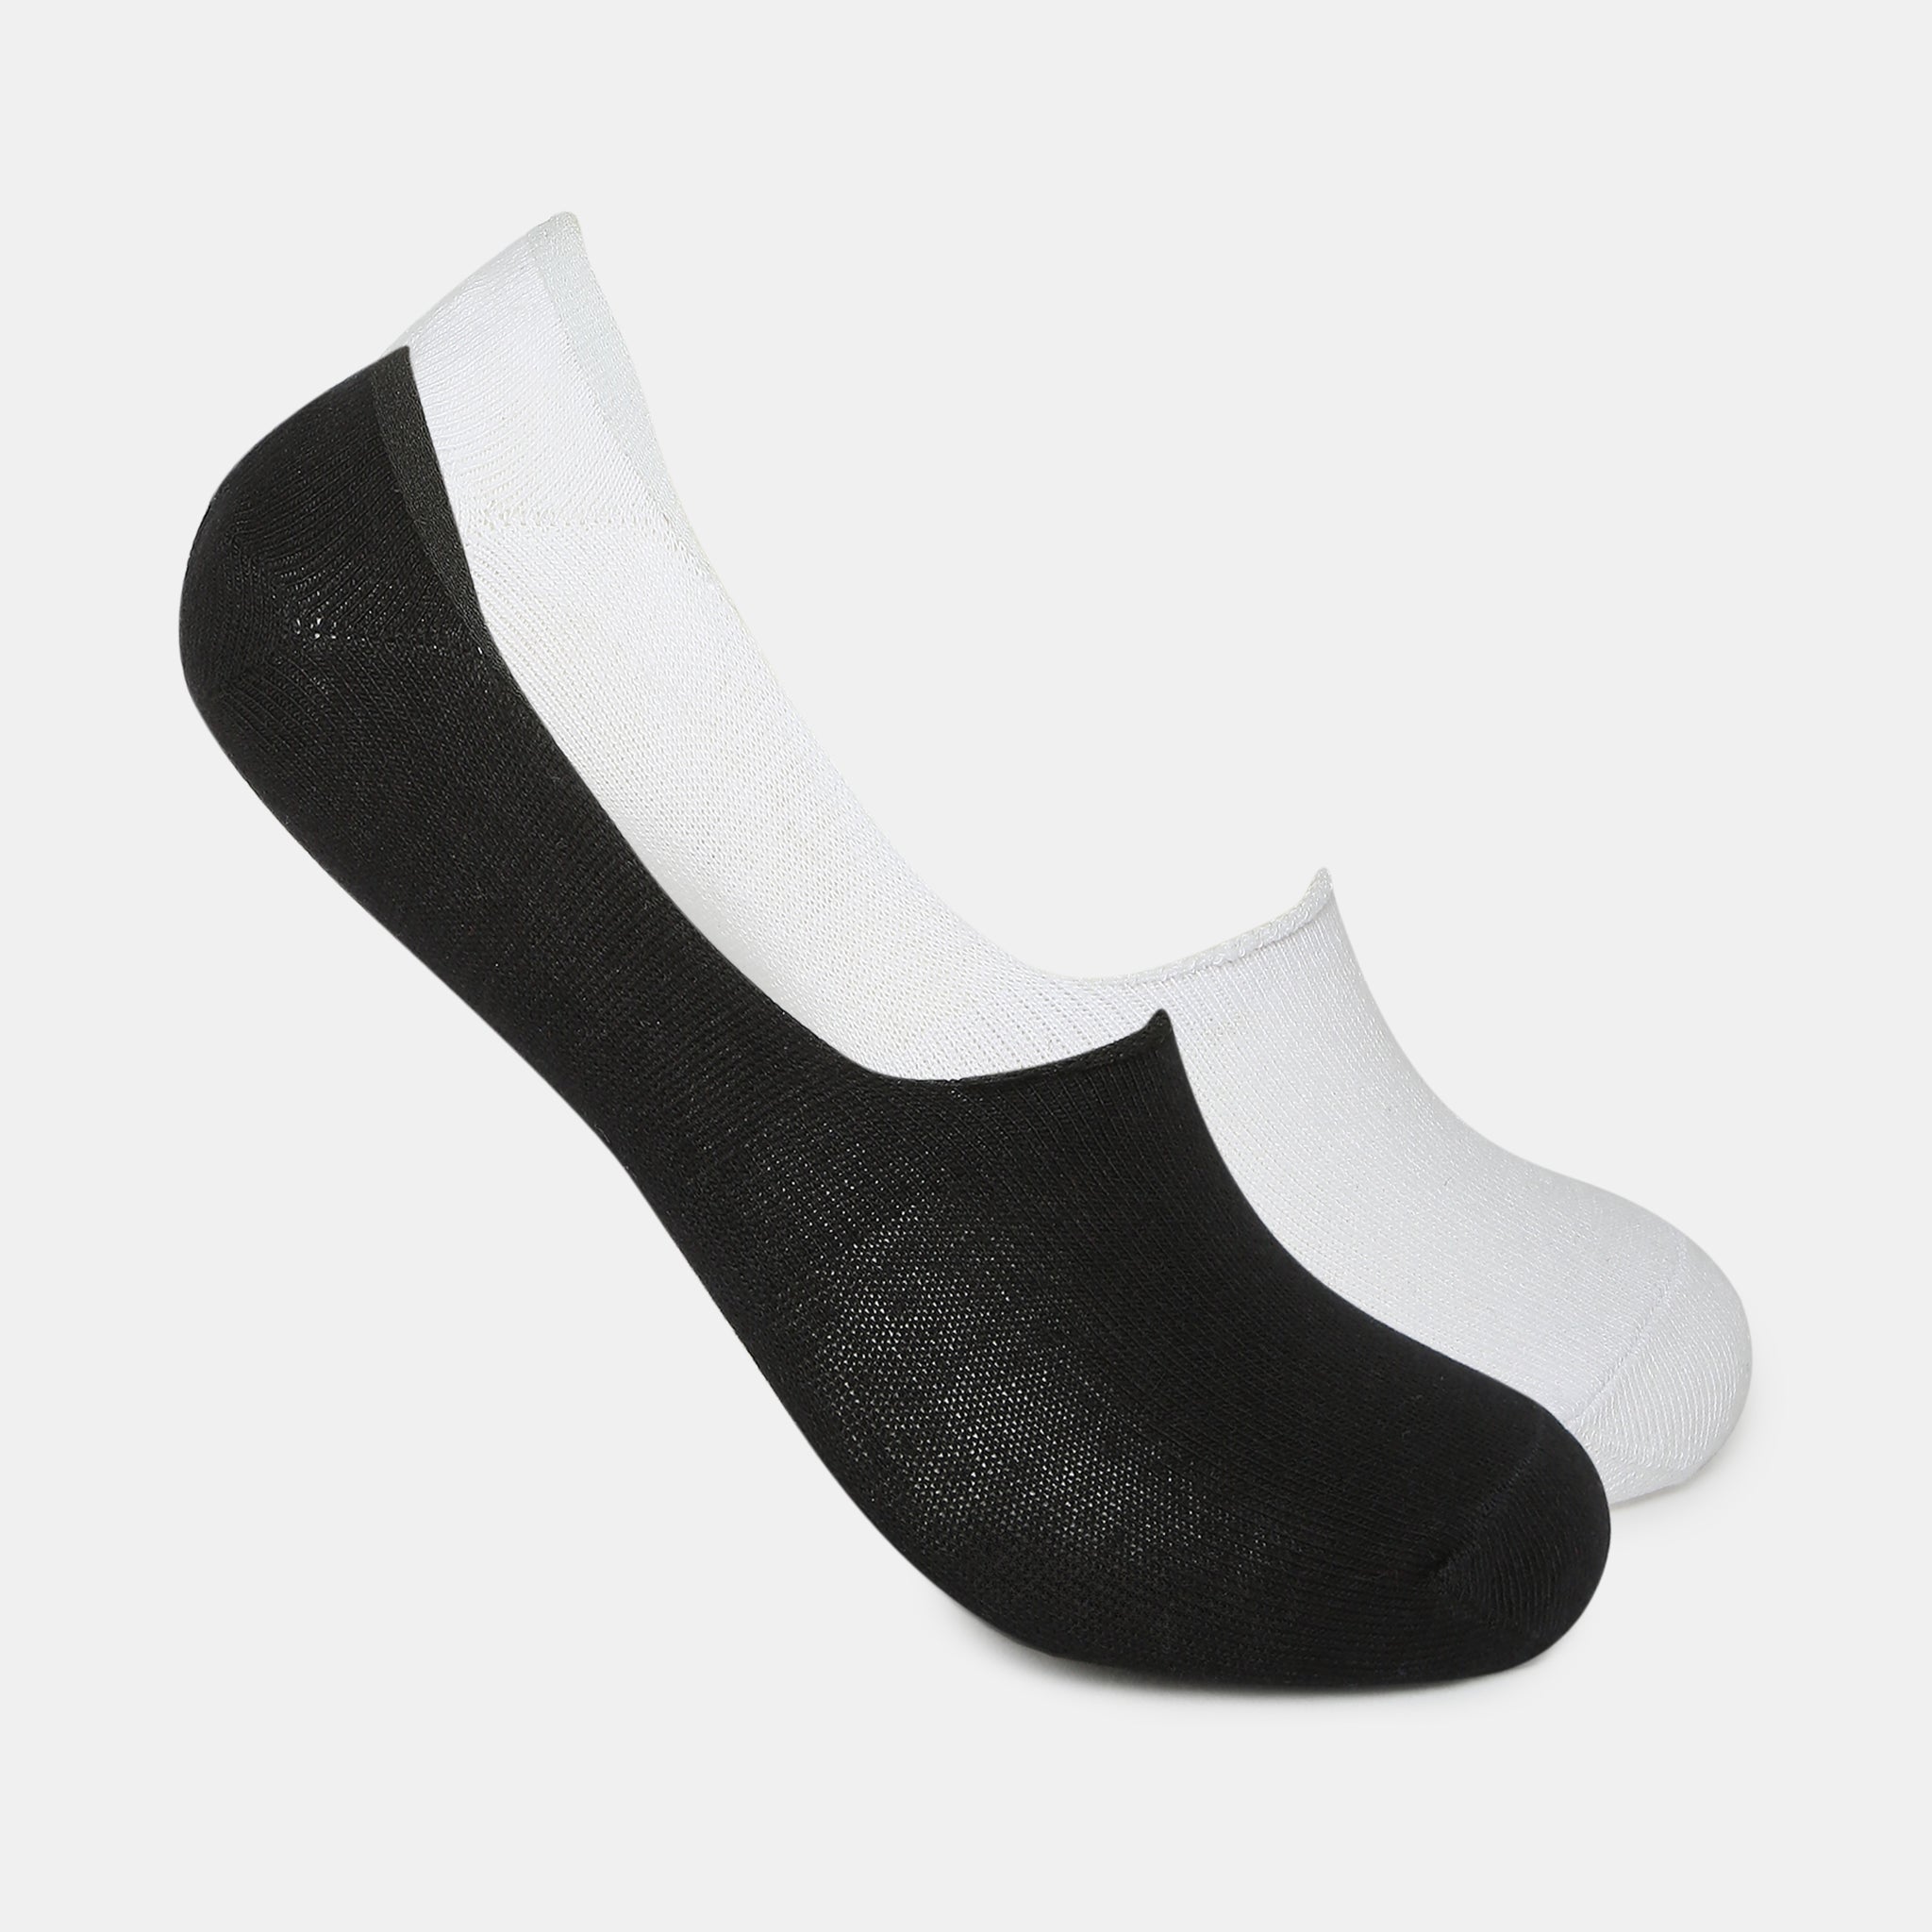 Mens Cotton Polyester Ankle Length Socks